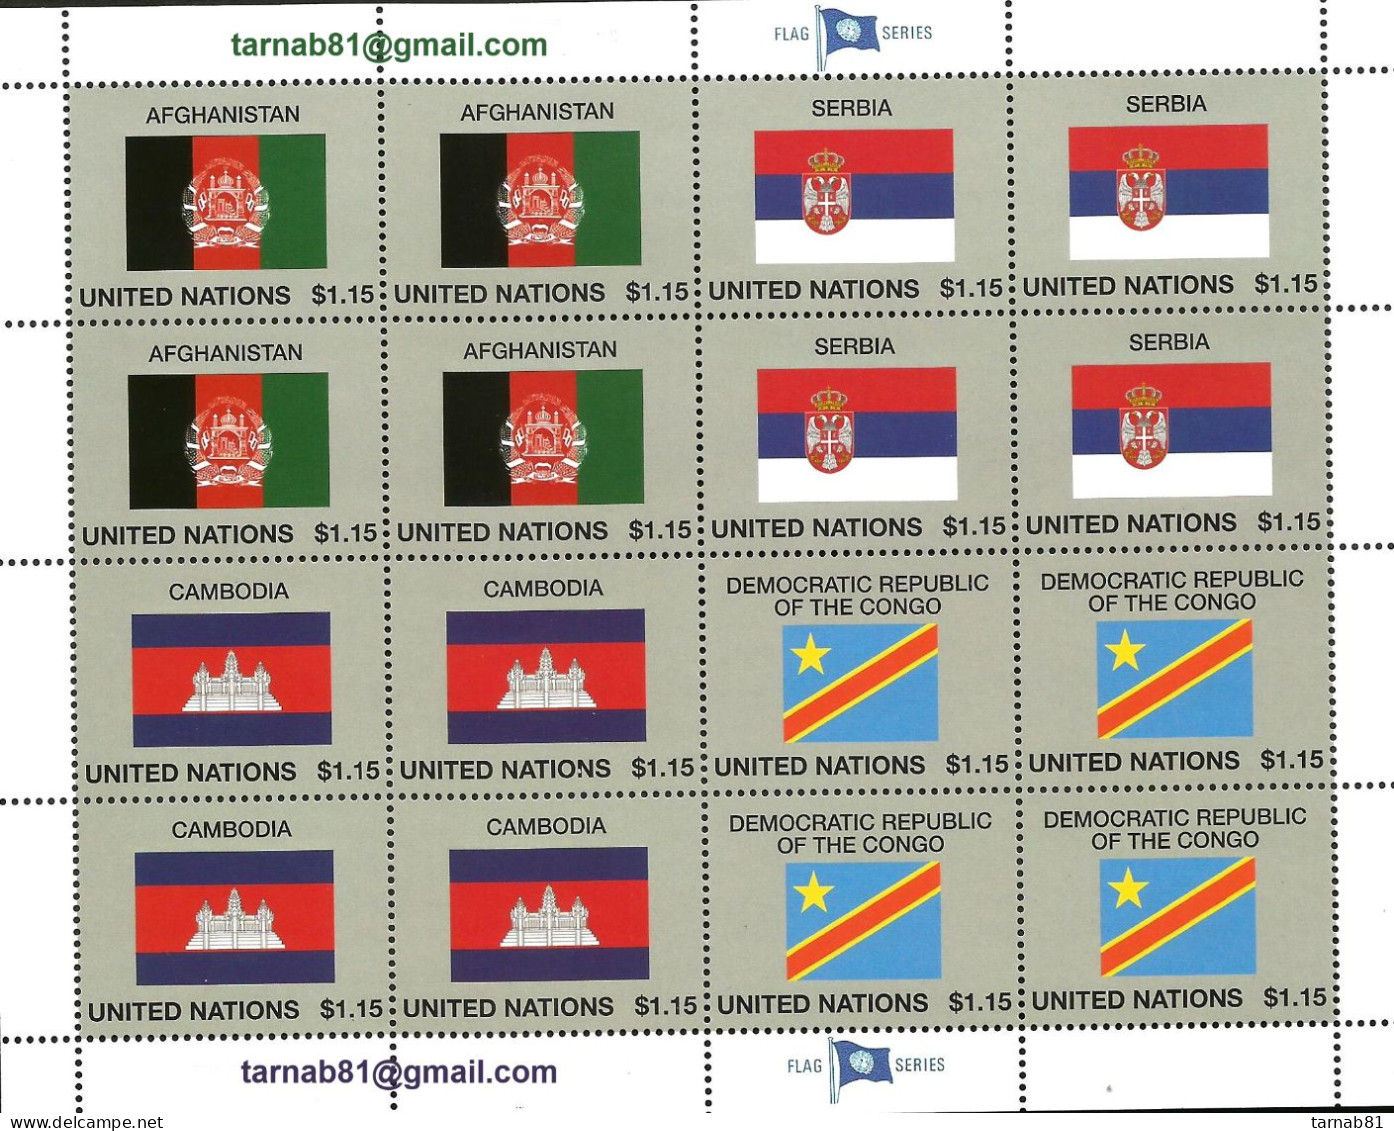 ONU  2014 Nations Unies Drapeaux Flags Flaggen  2014 ONU - Unused Stamps